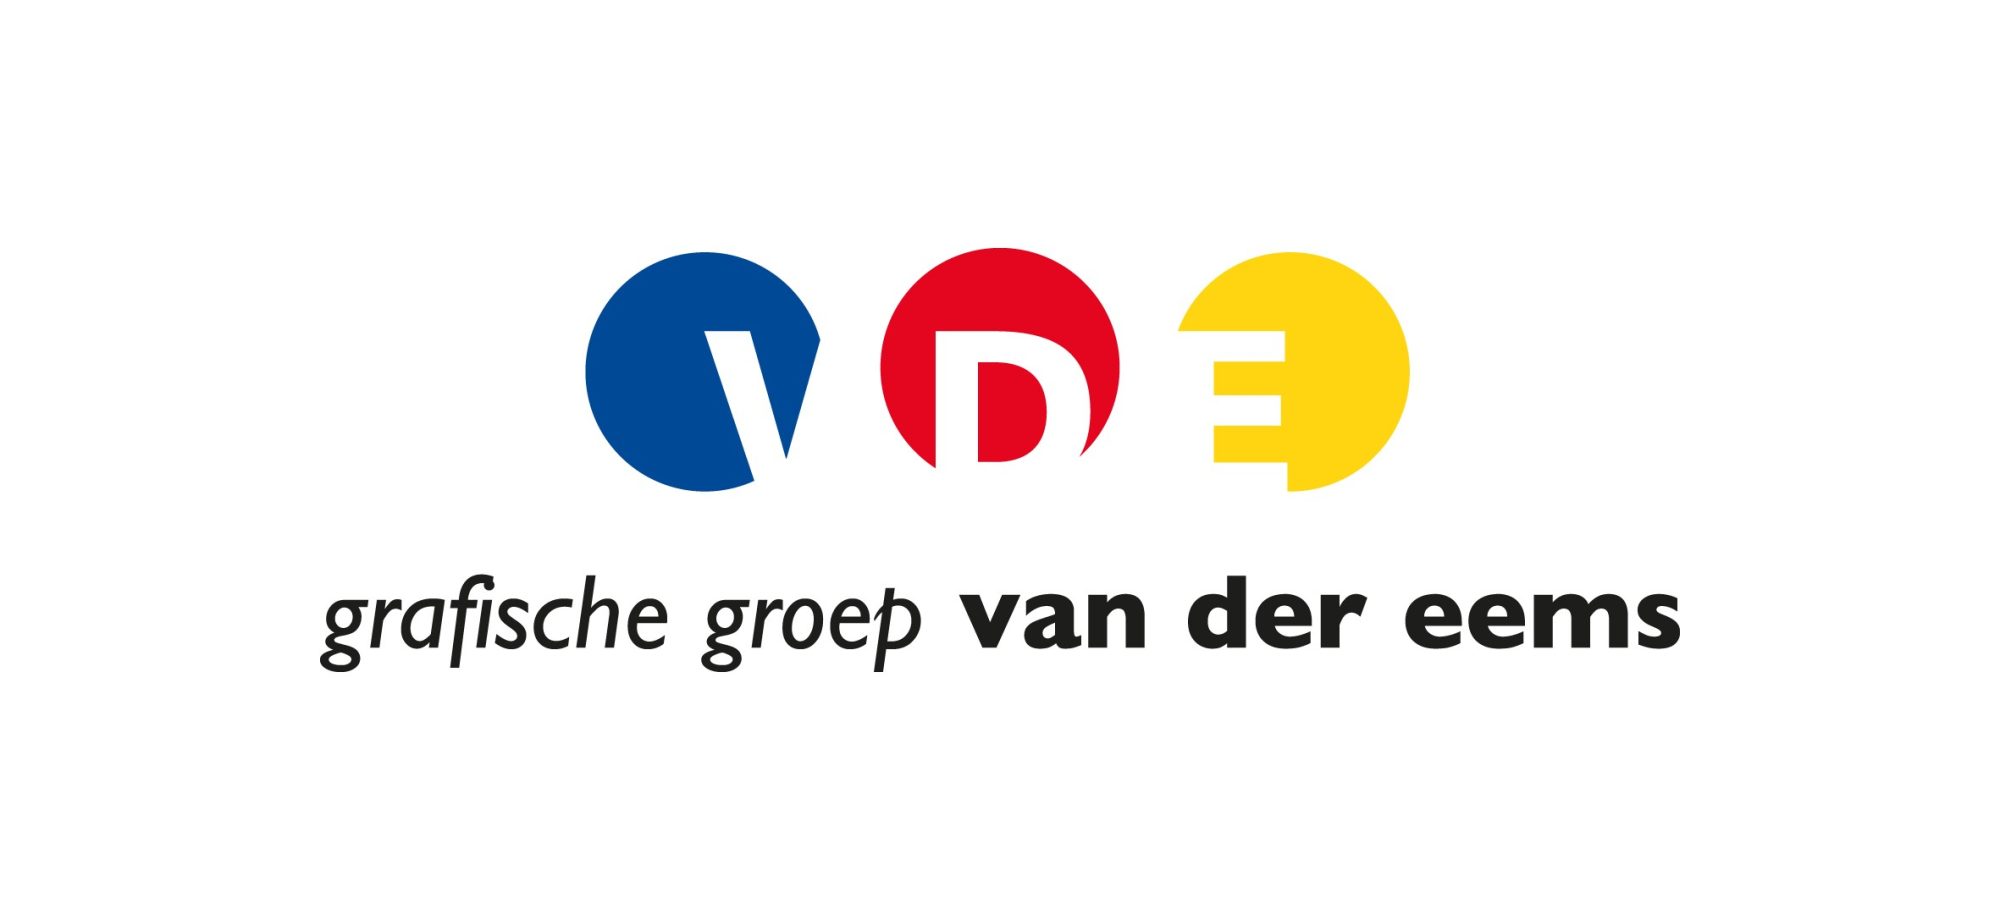 Grafische groep van der Eems logo blauw wit rood geel zwart